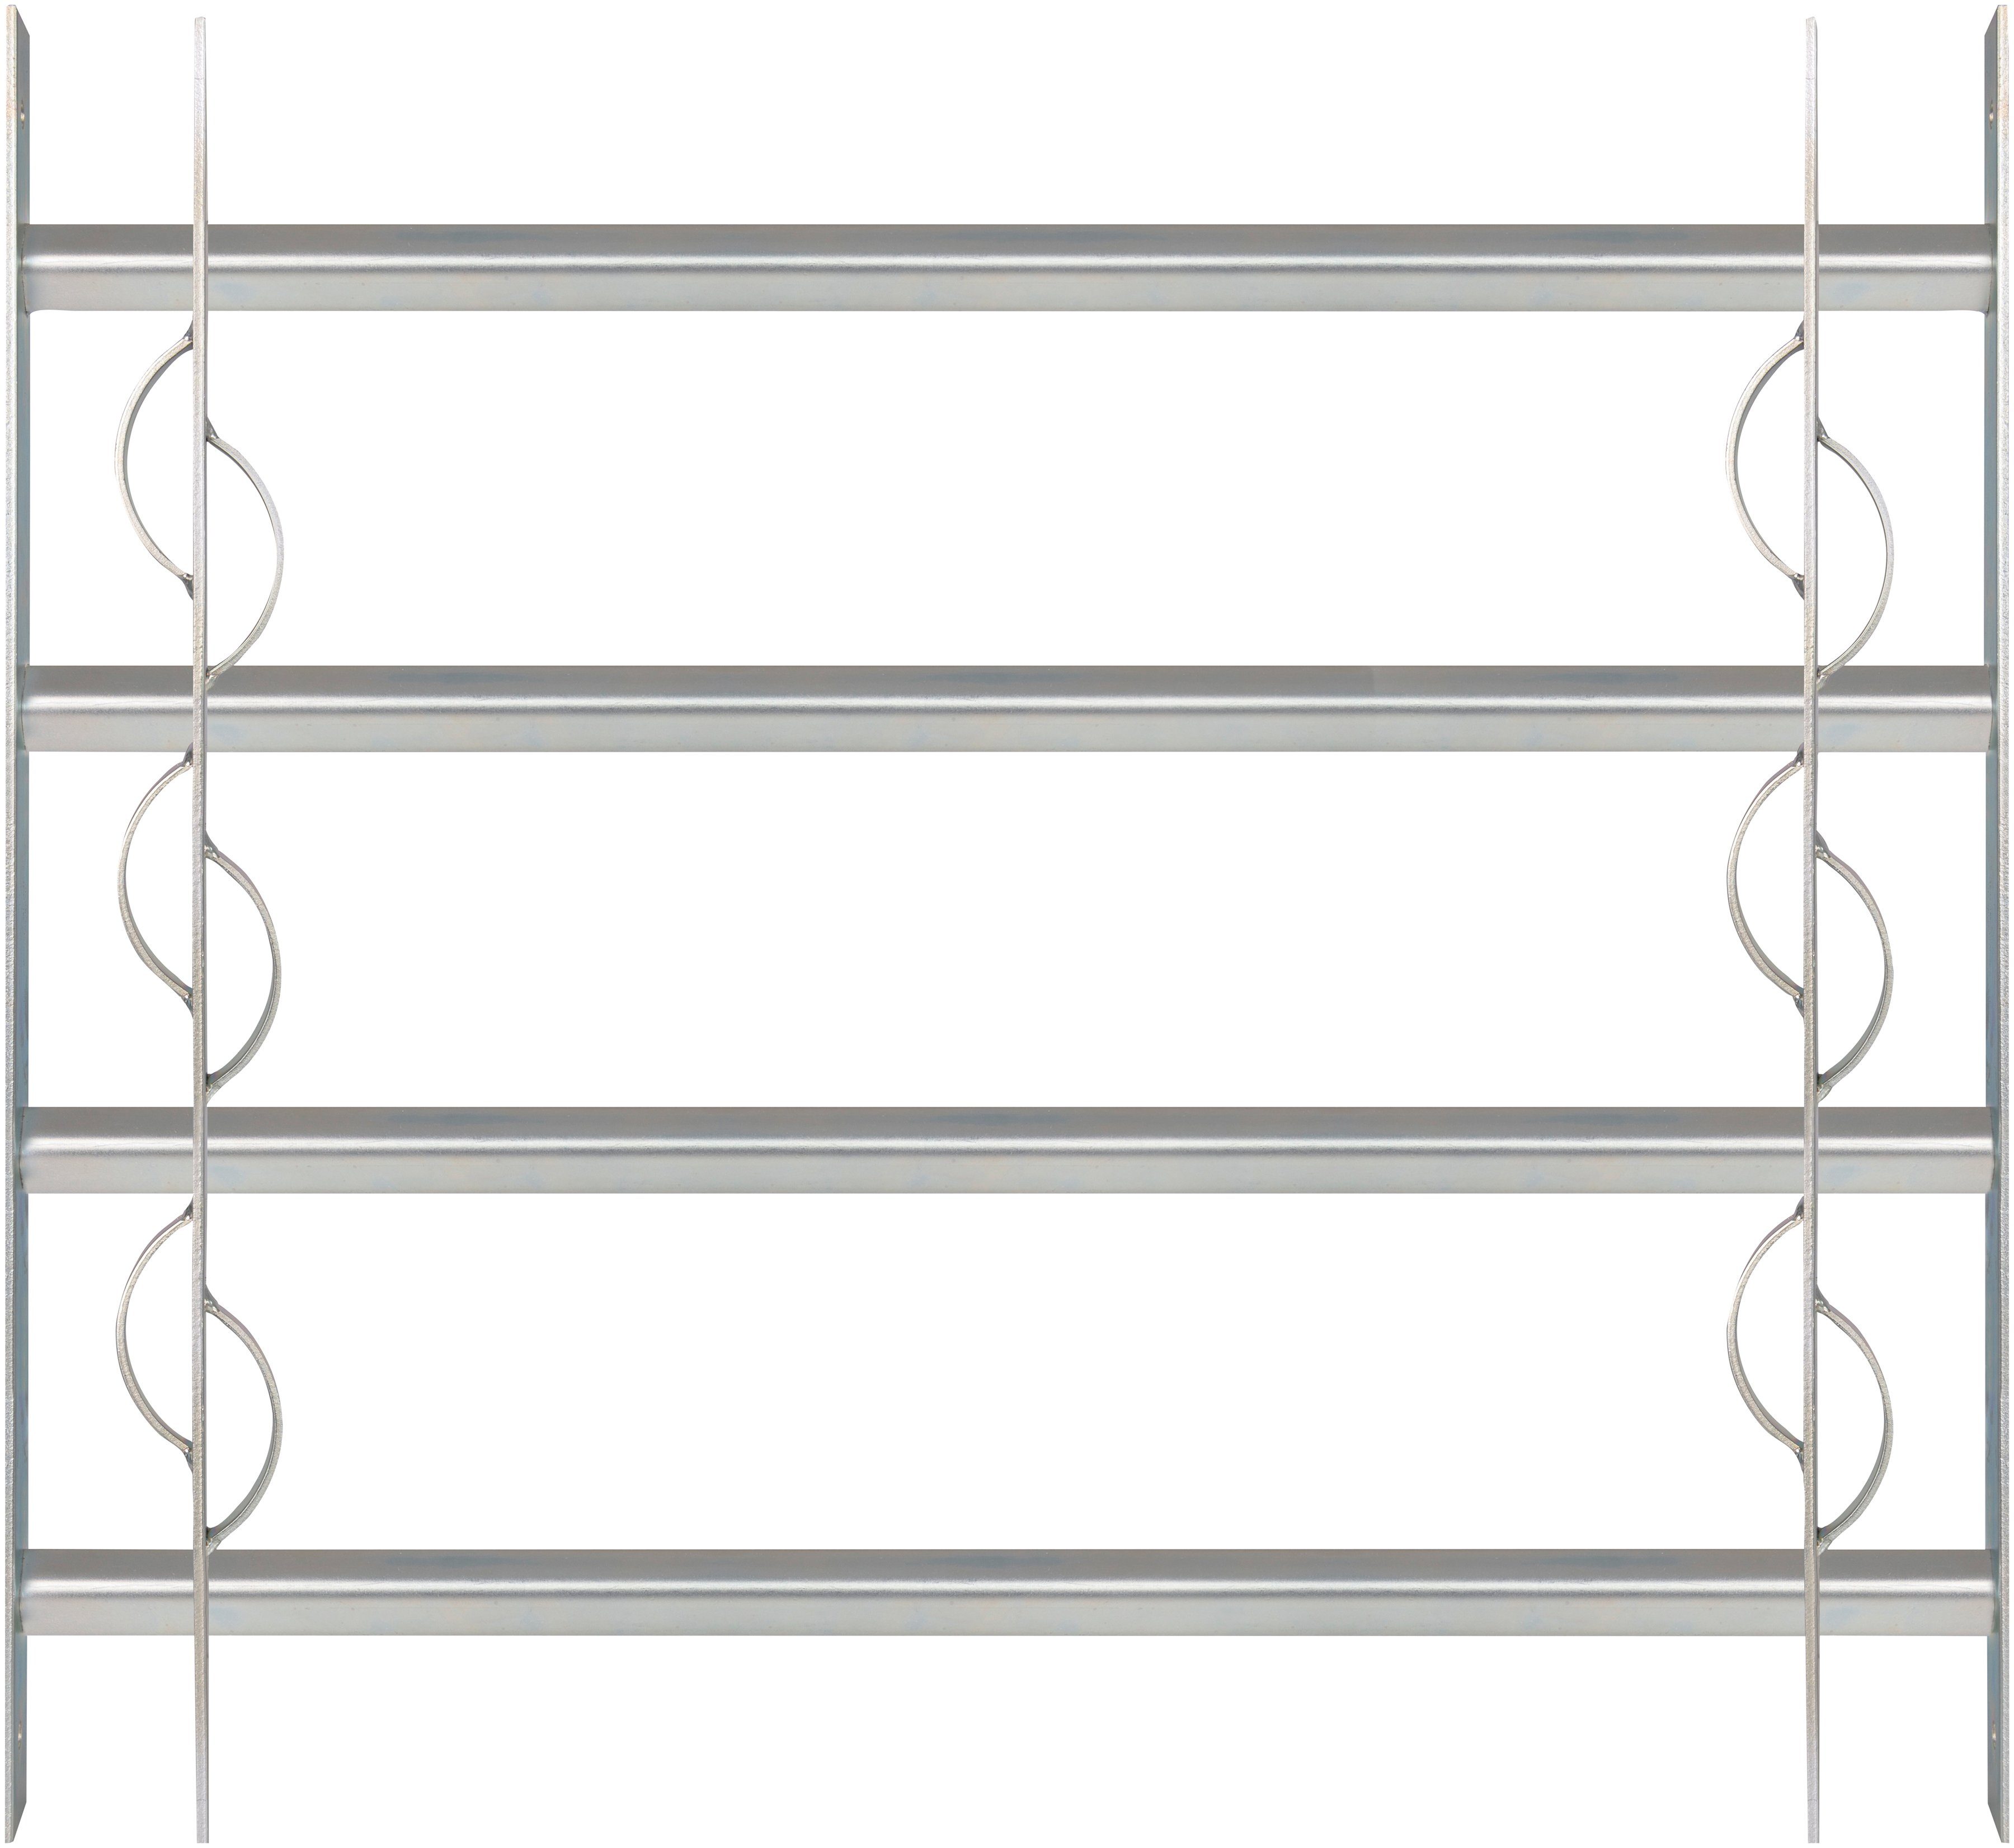 Alberts Fensterschutzgitter Secorino Style, BxH: 70-105x60 cm